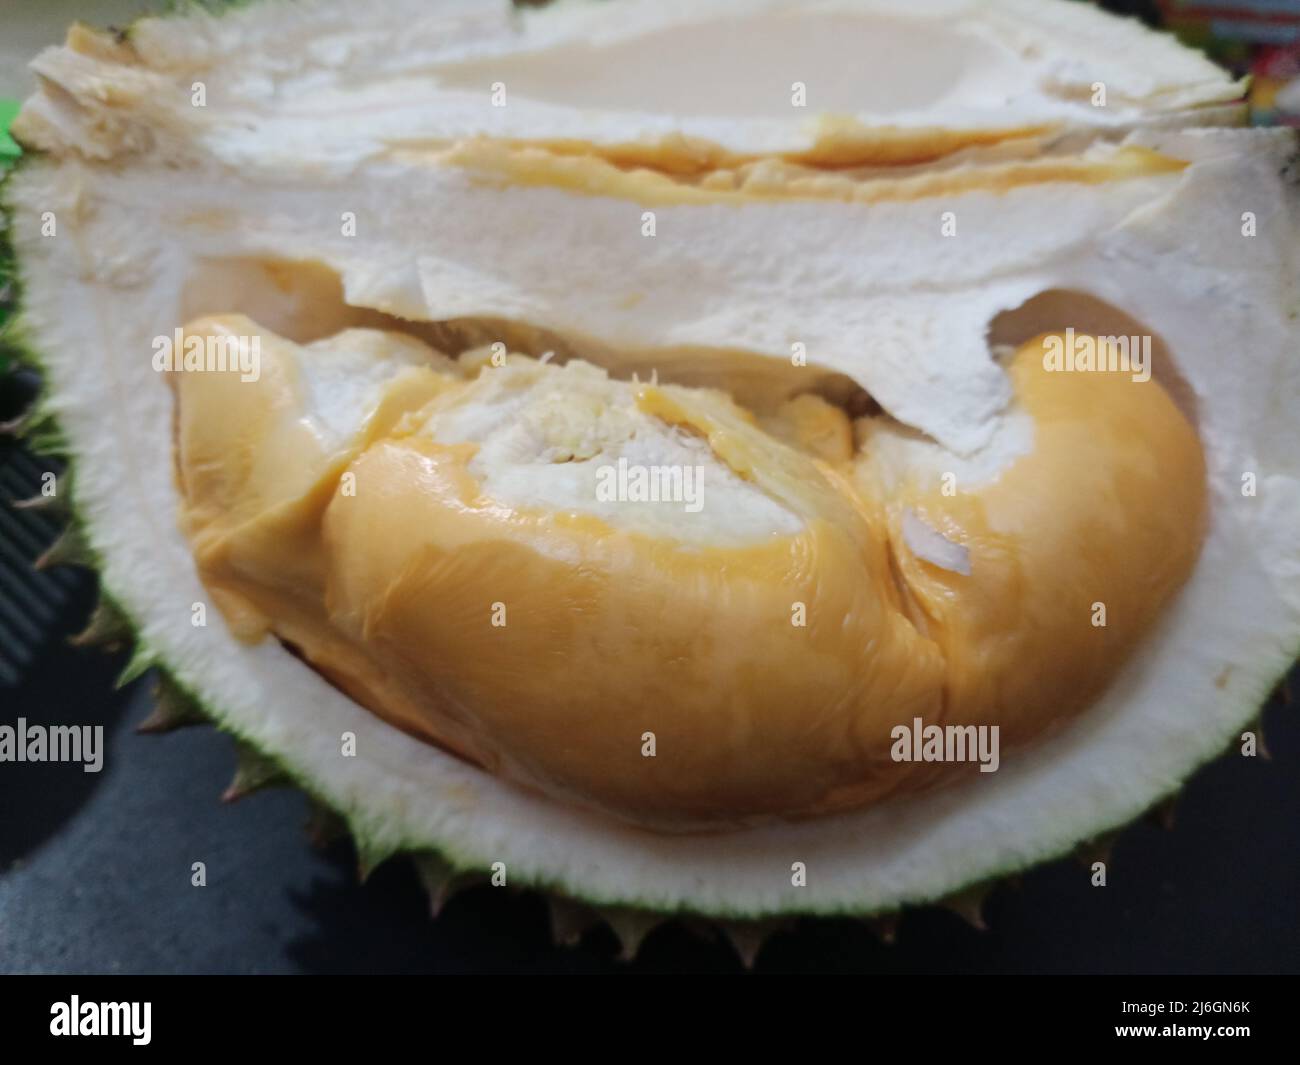 Opened durian Malaysian fruit Stock Photo